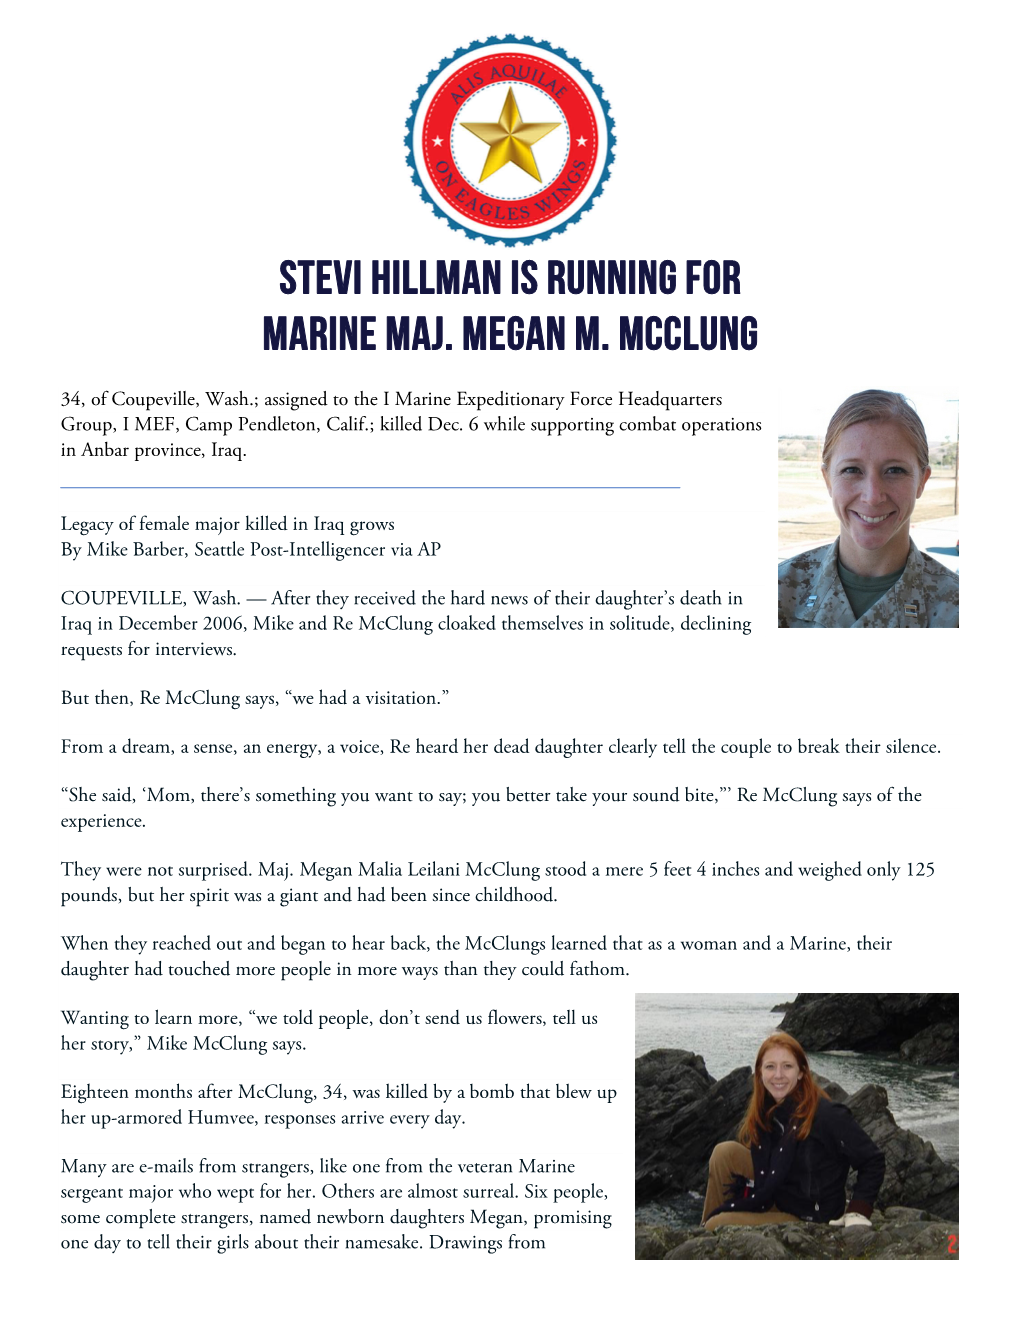 STEVI HILLMAN Is Running for Marine Maj. Megan M. Mcclung